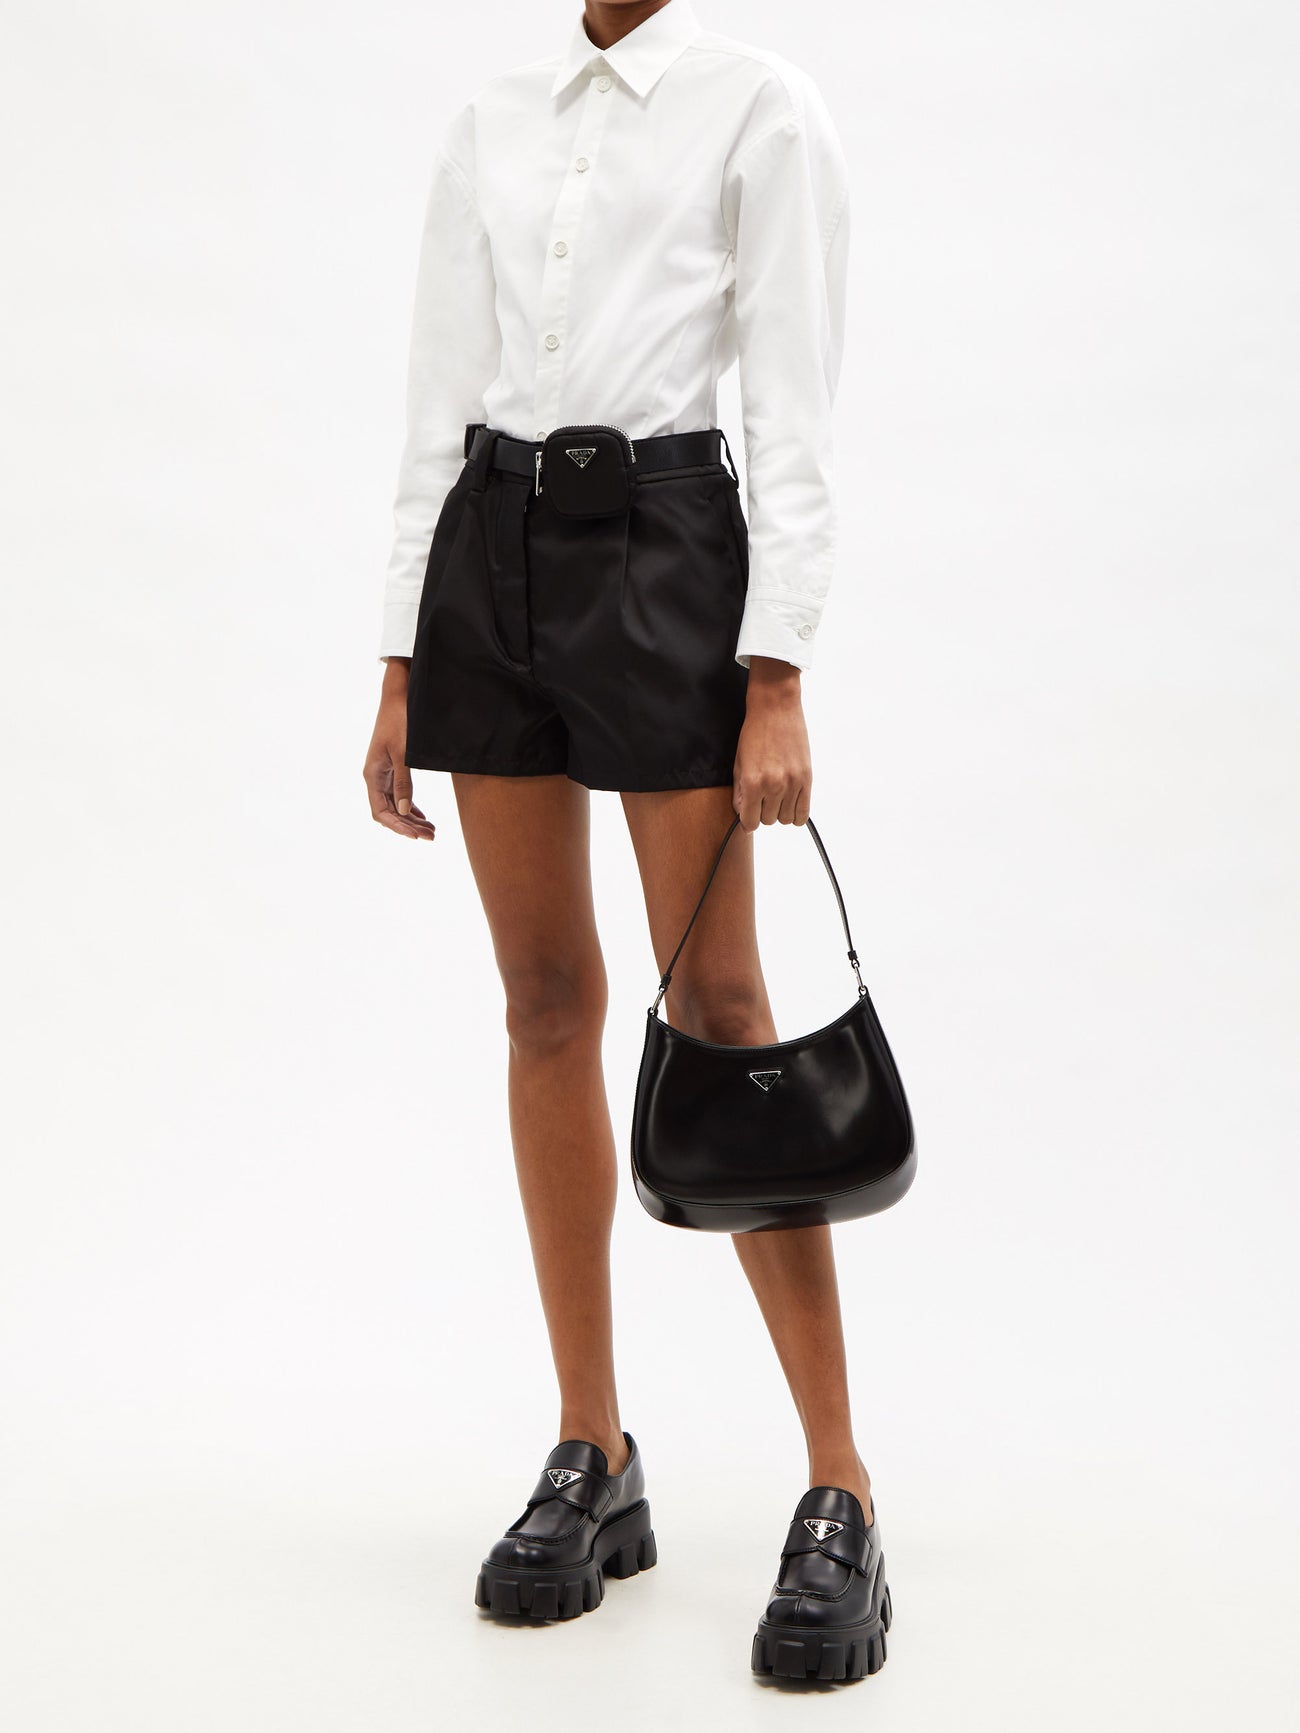 2022 Women Fashion Casual Hobo Bags Black Shoulder Crossbody Bag